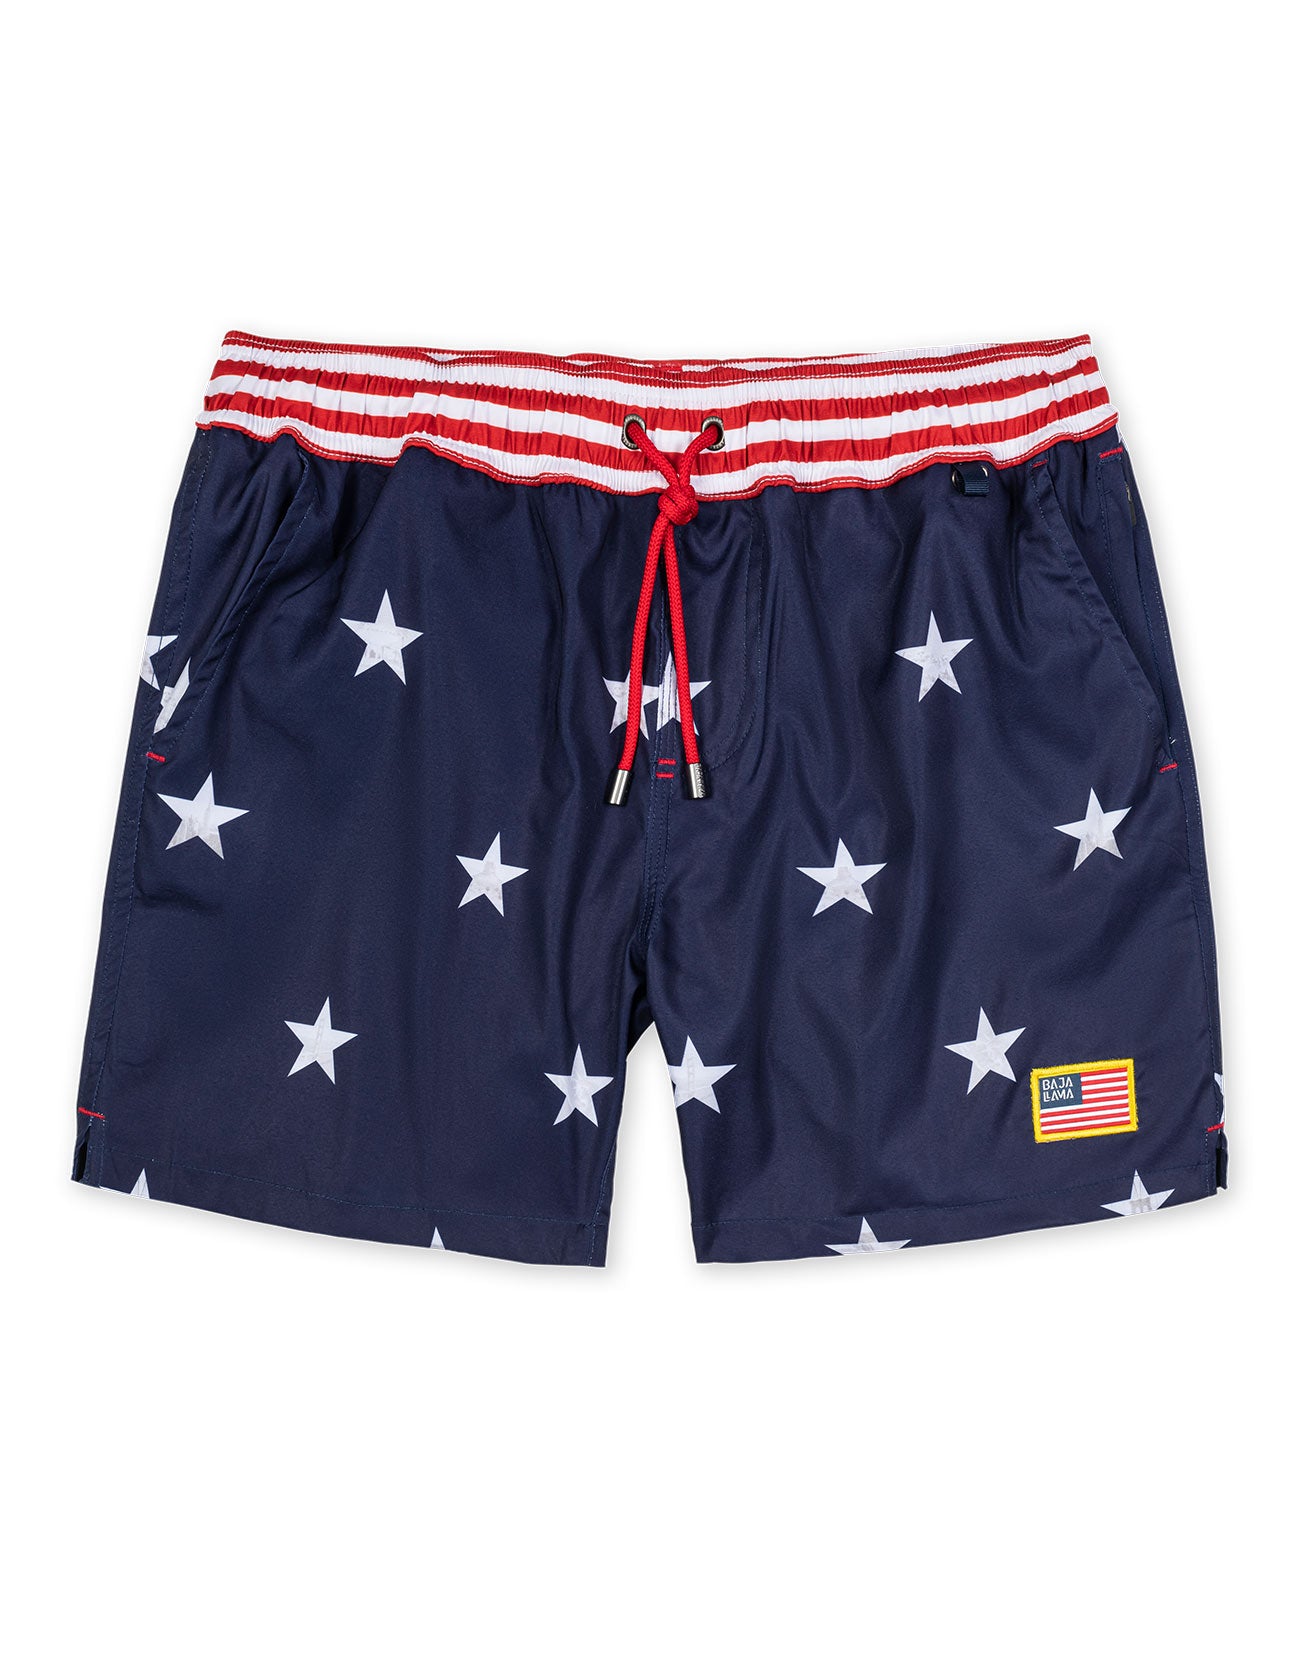 Navy swimsuit USA flag-inspired shorts showcasing famous USA Landmarks. 